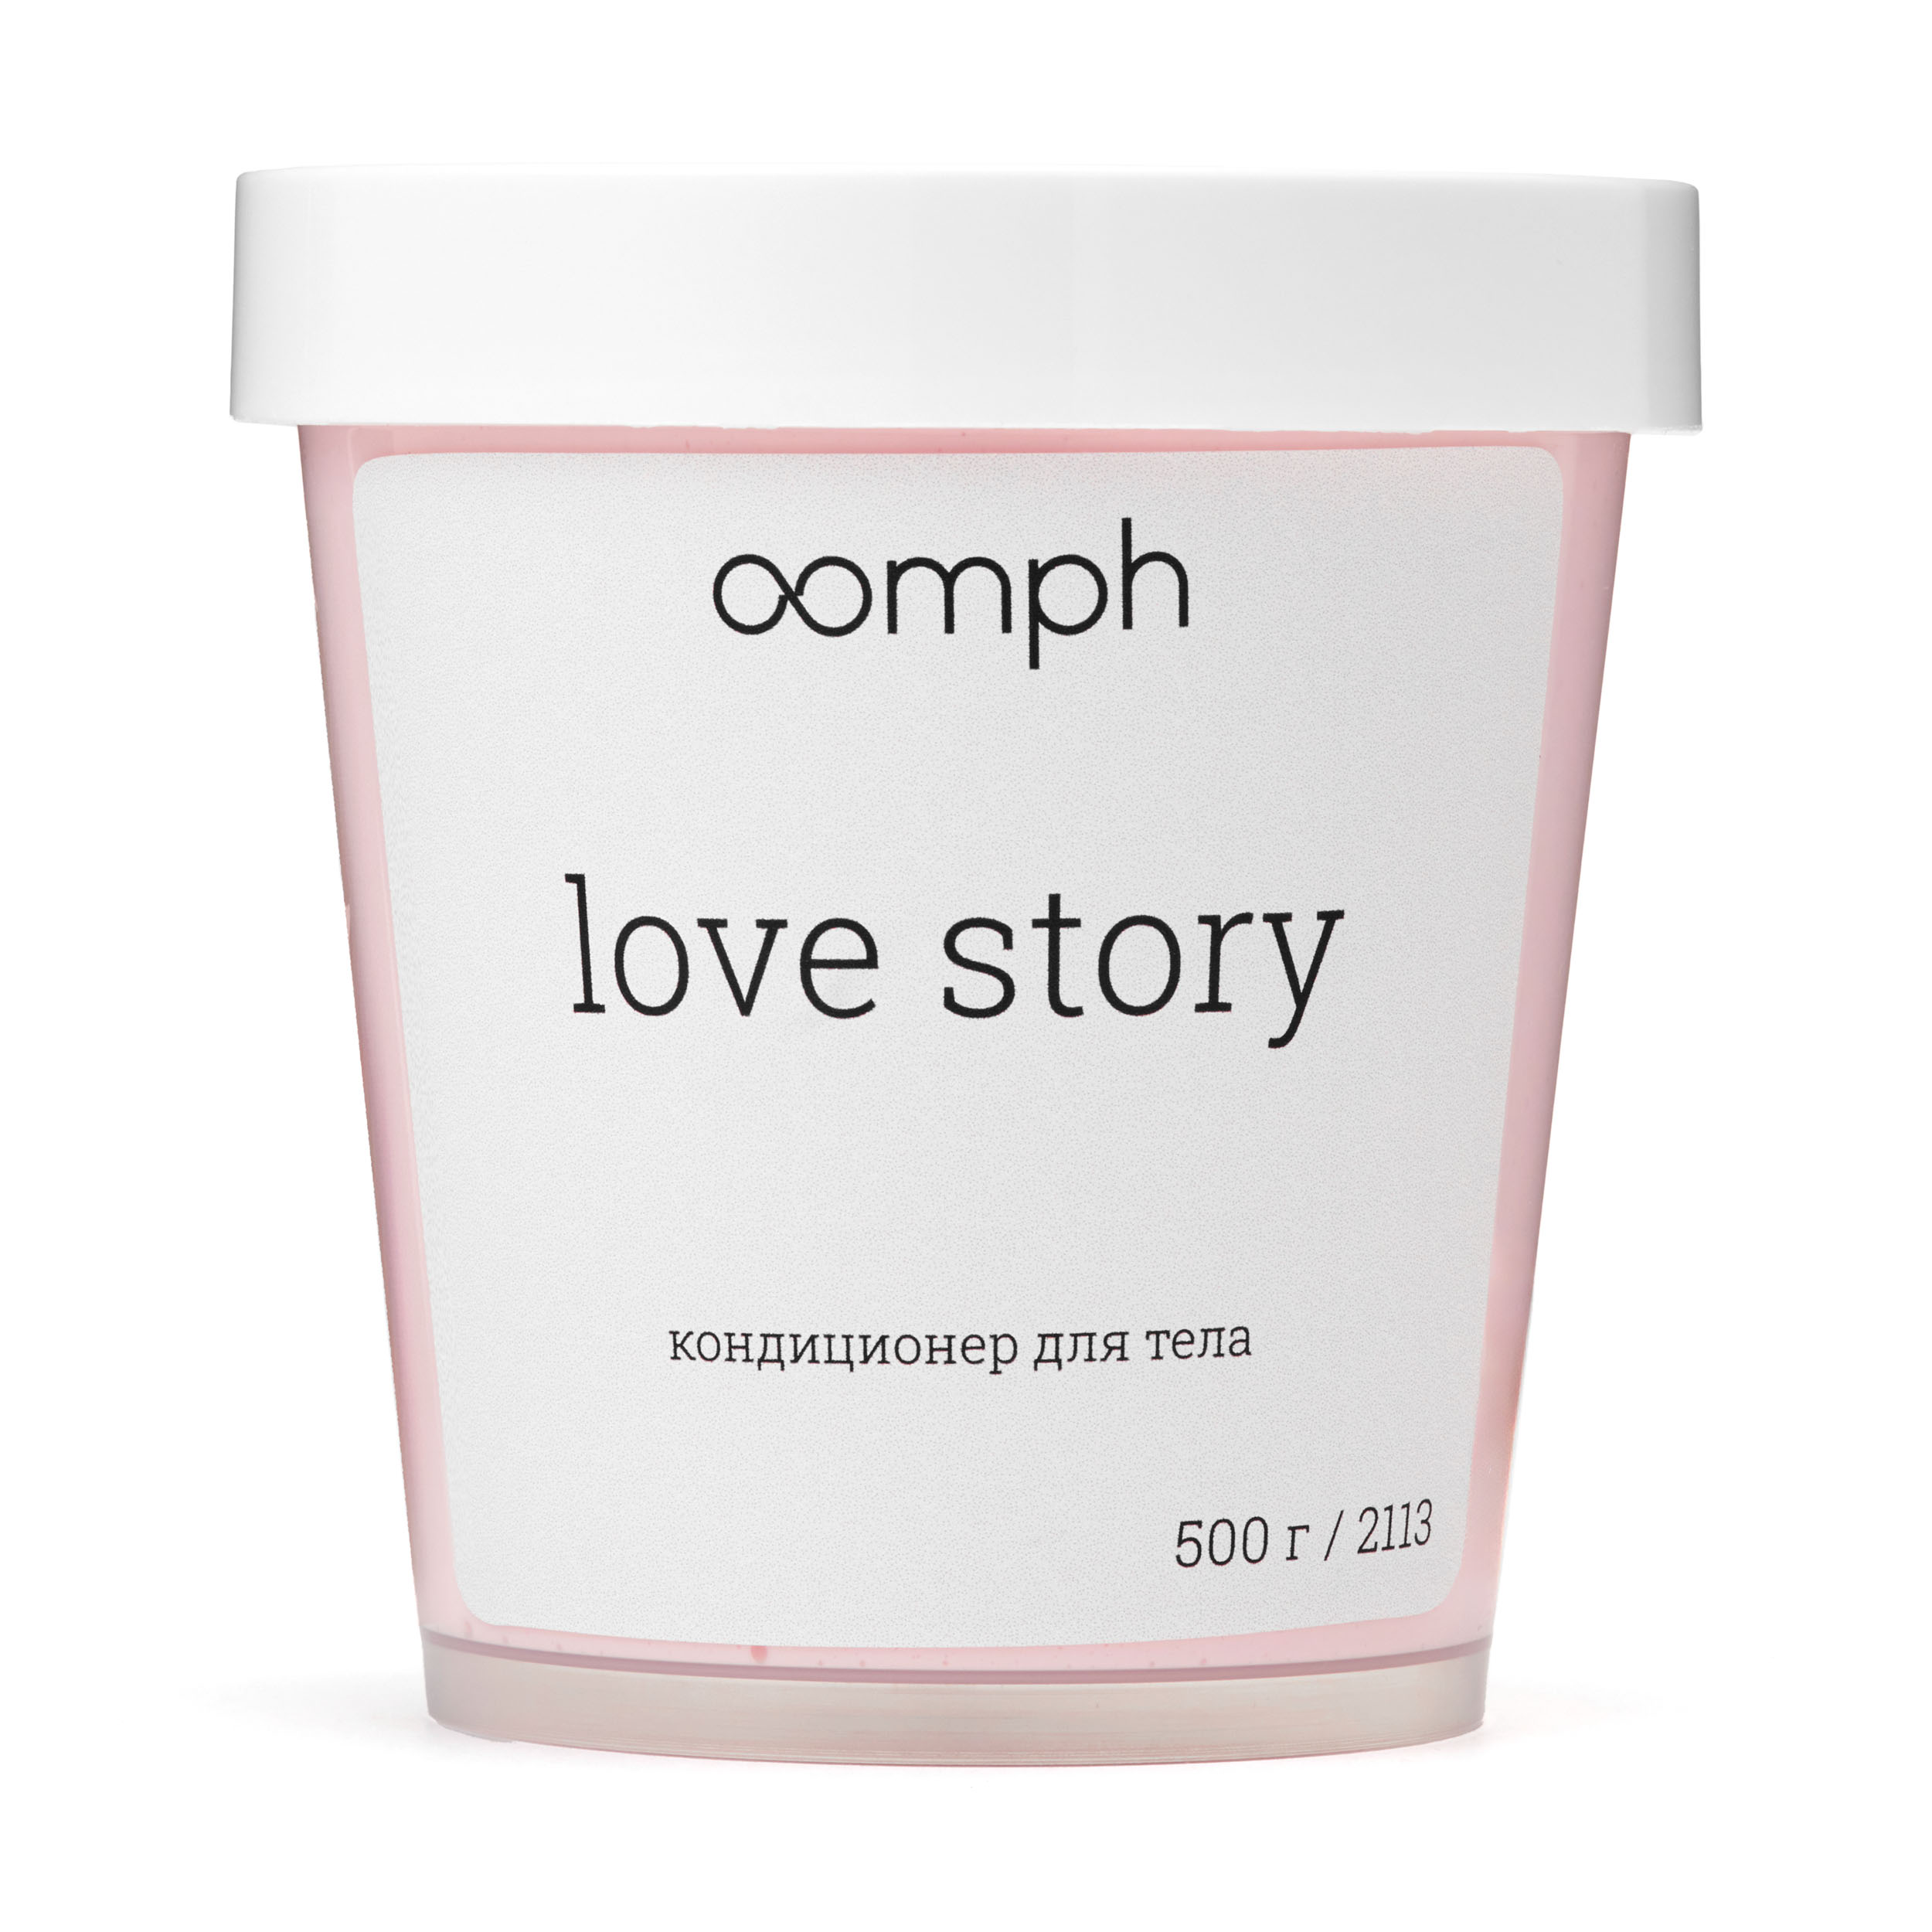 Кондиционер для тела OOMPH Love story 500г ромео и джульетта уильяма шекспира